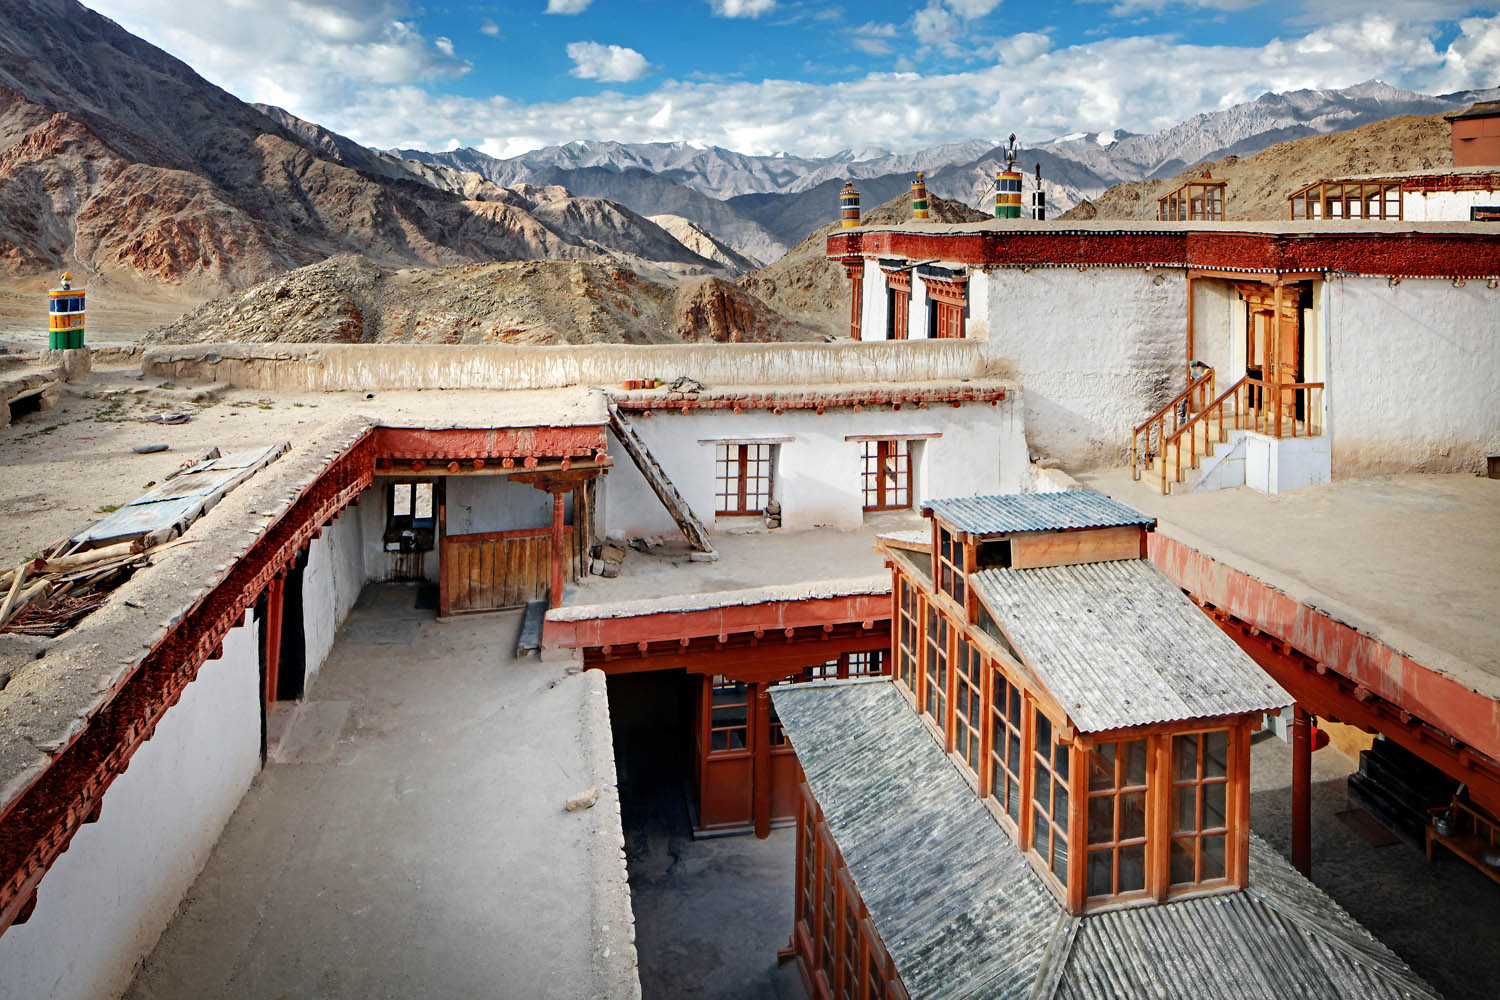 On the roof, Chemdrey Monastery, Ladakh, India